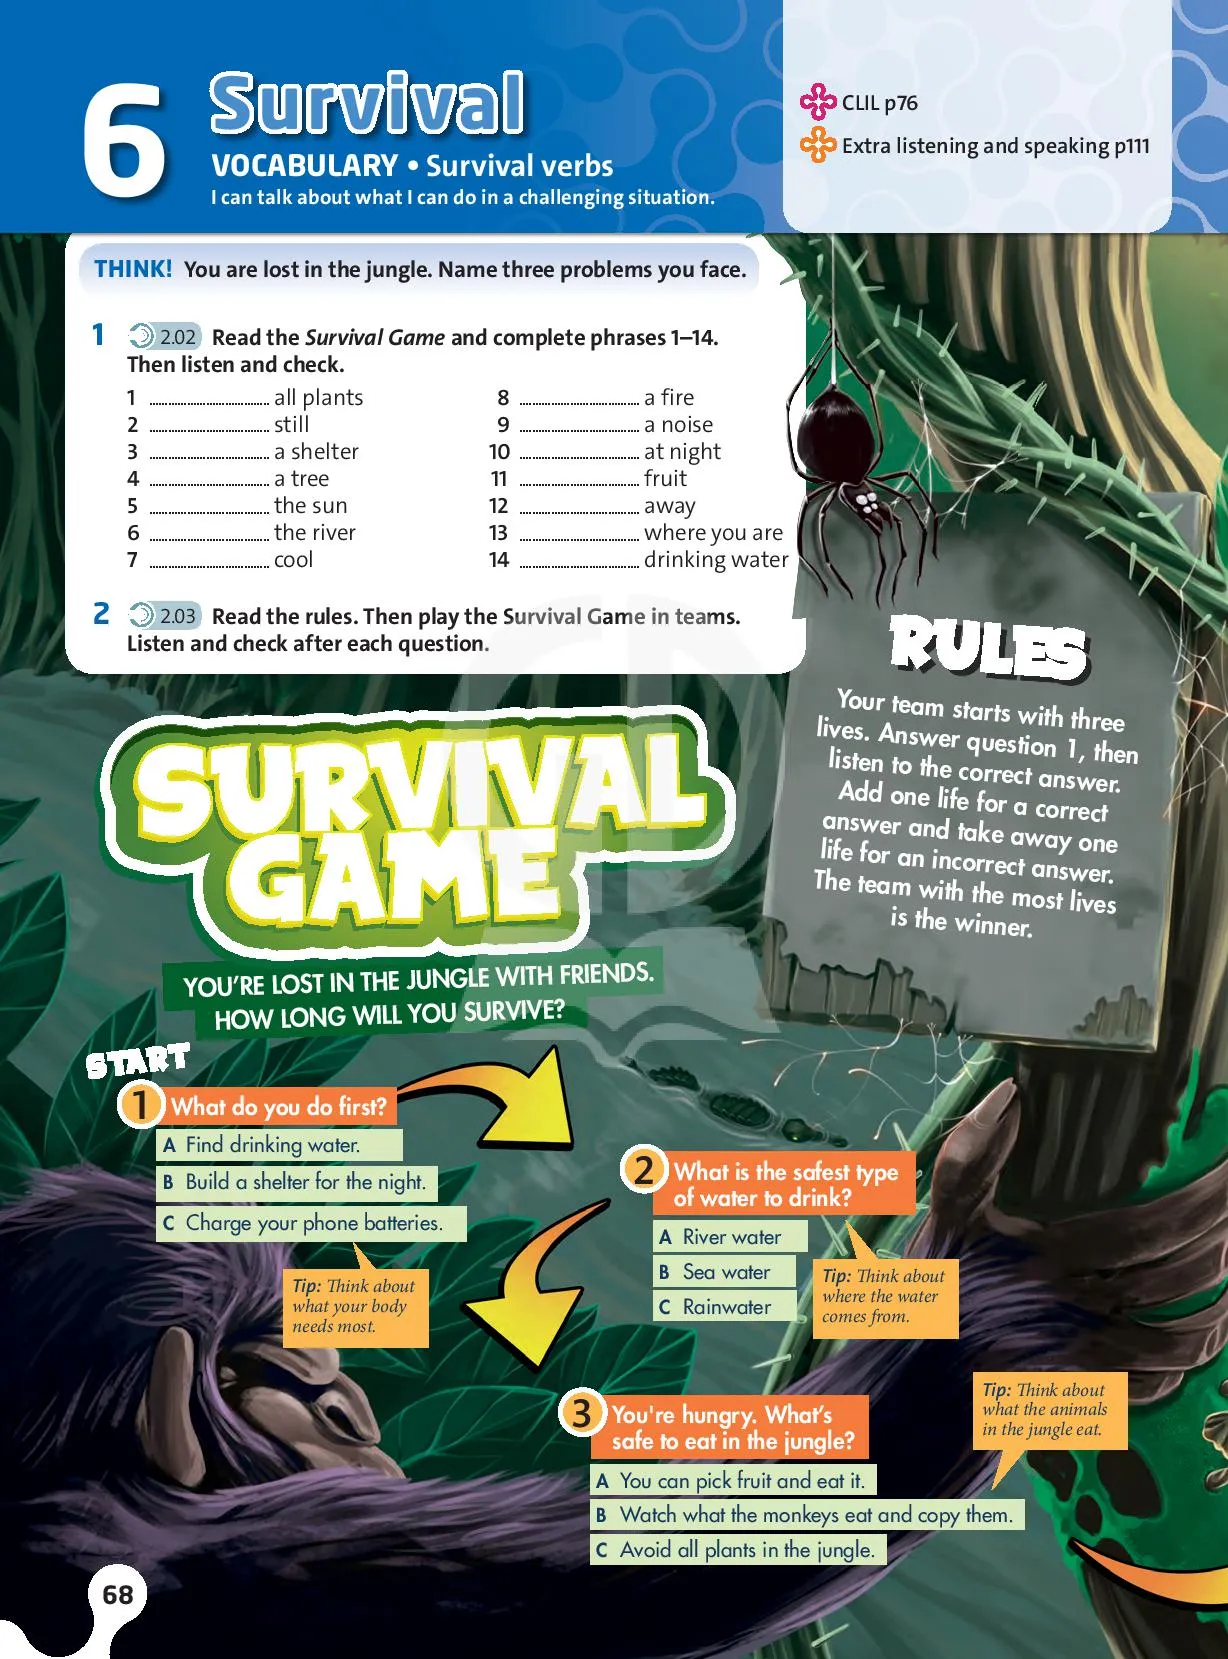 Survival verbs build, find, follow, climb, etc. Key phrases: Ability